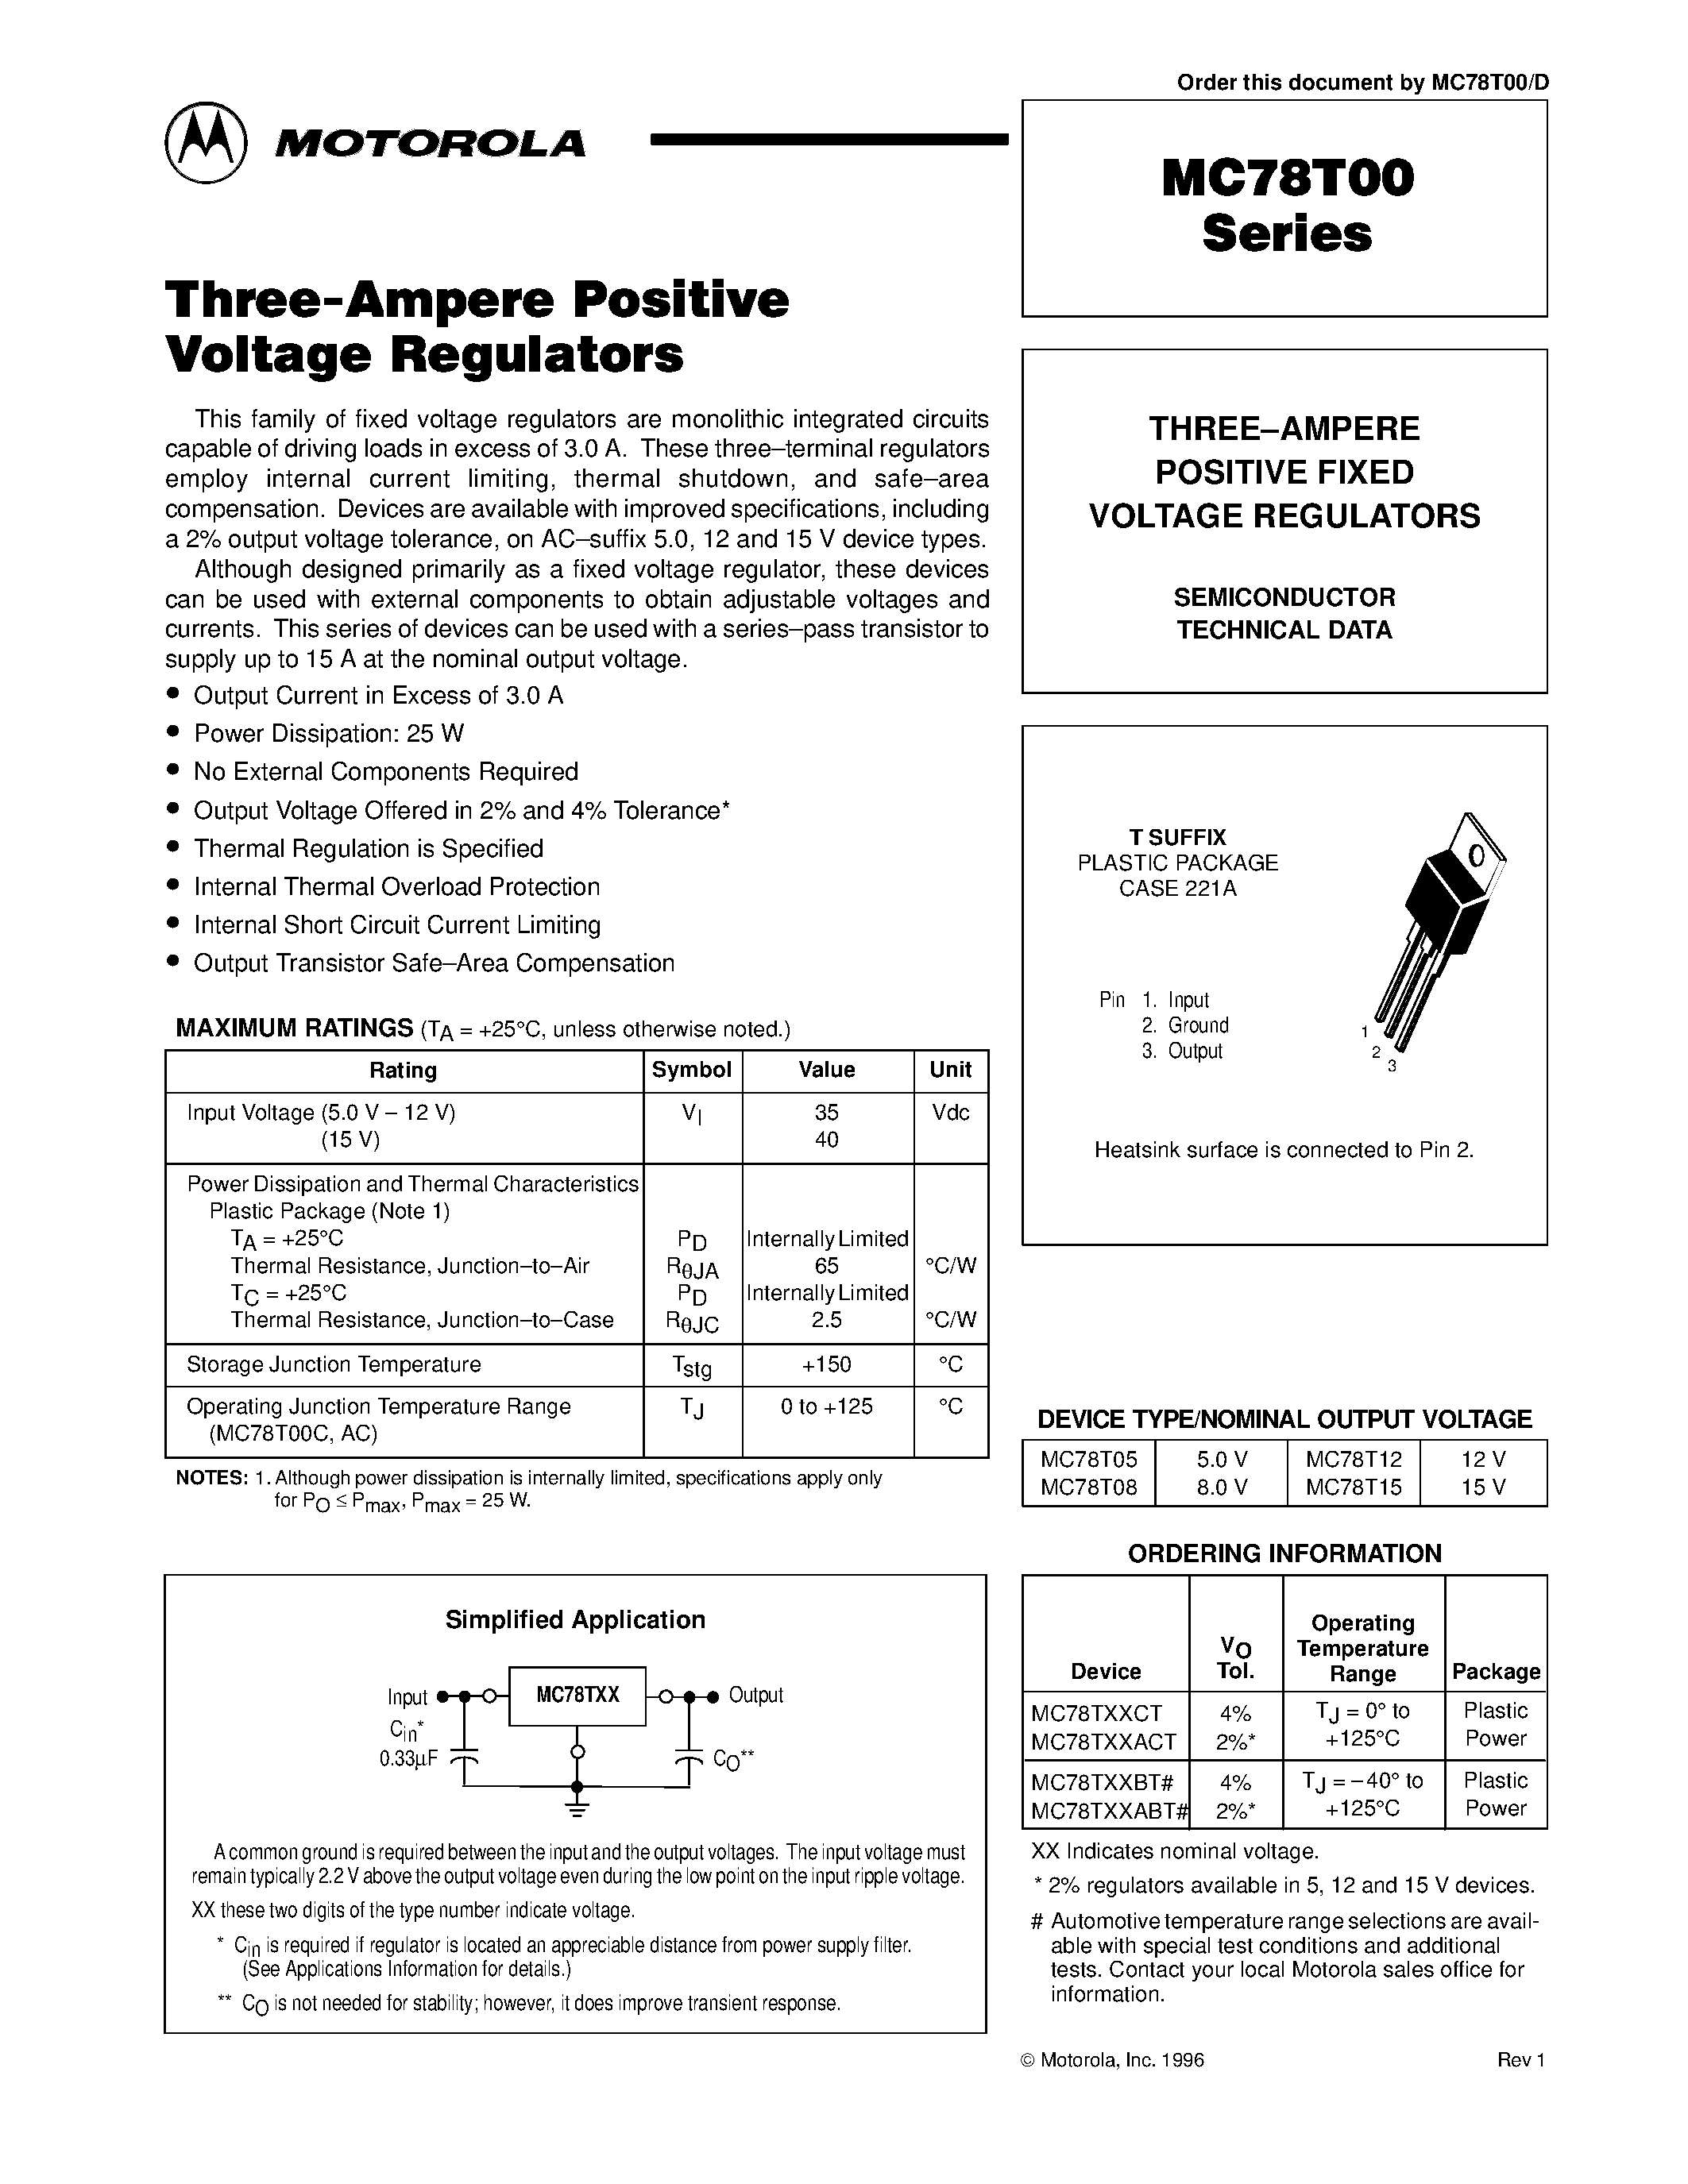 Даташит MC78T12AC - THREE-AMPERE POSITIVE FIXED VOLTAGE REGULATORS страница 1